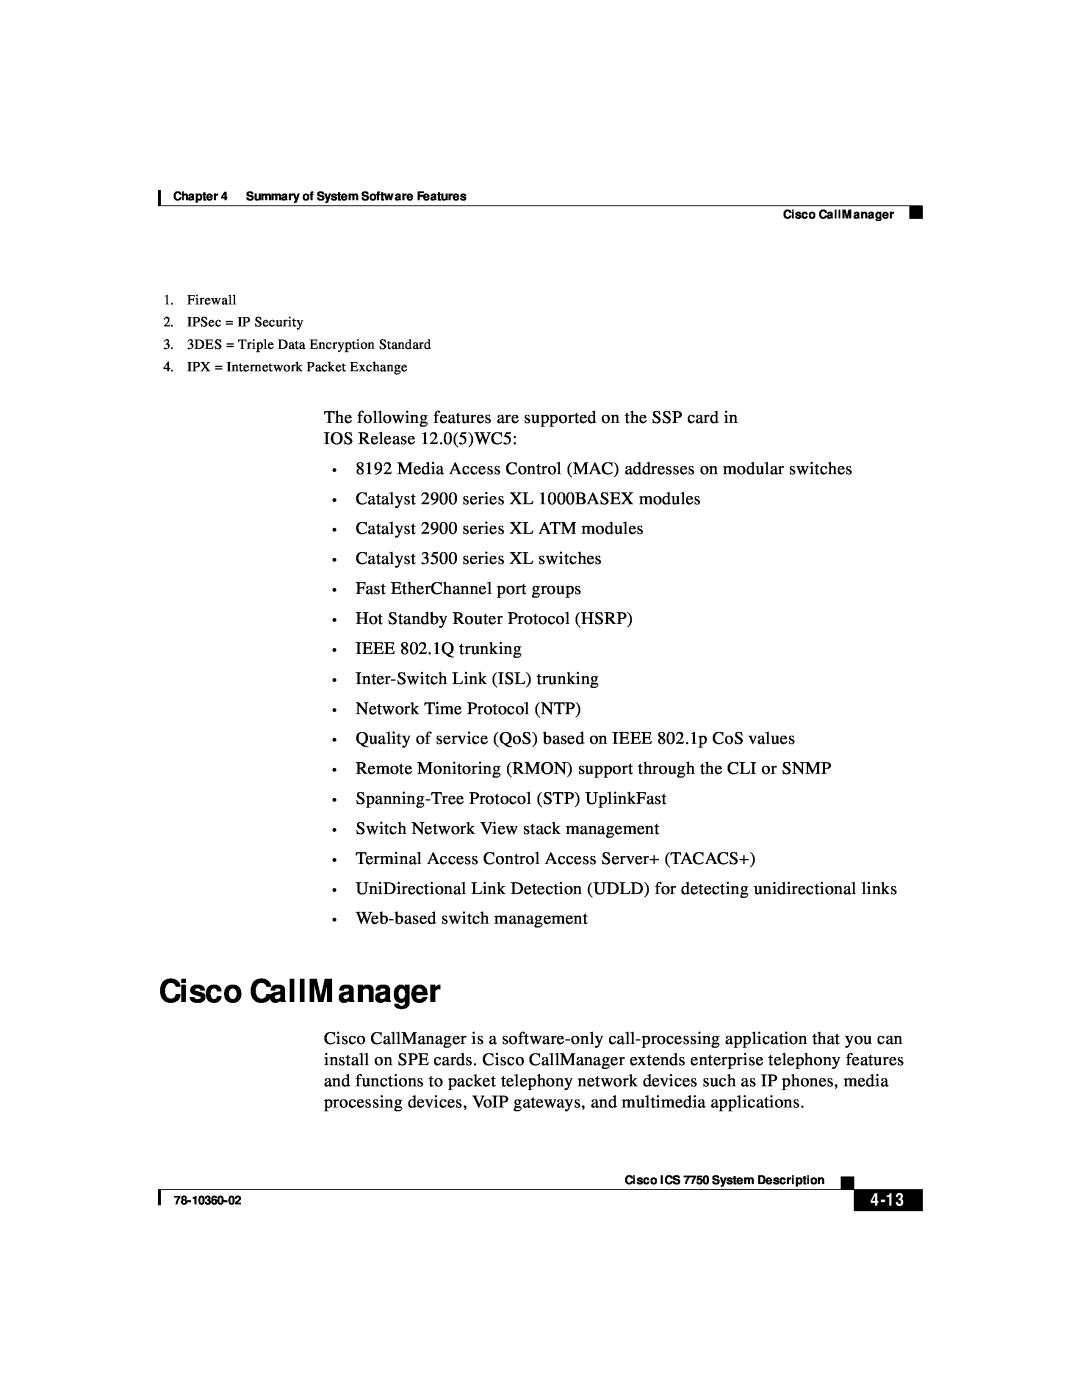 Cisco Systems ICS-7750 manual Cisco CallManager, 4-13 